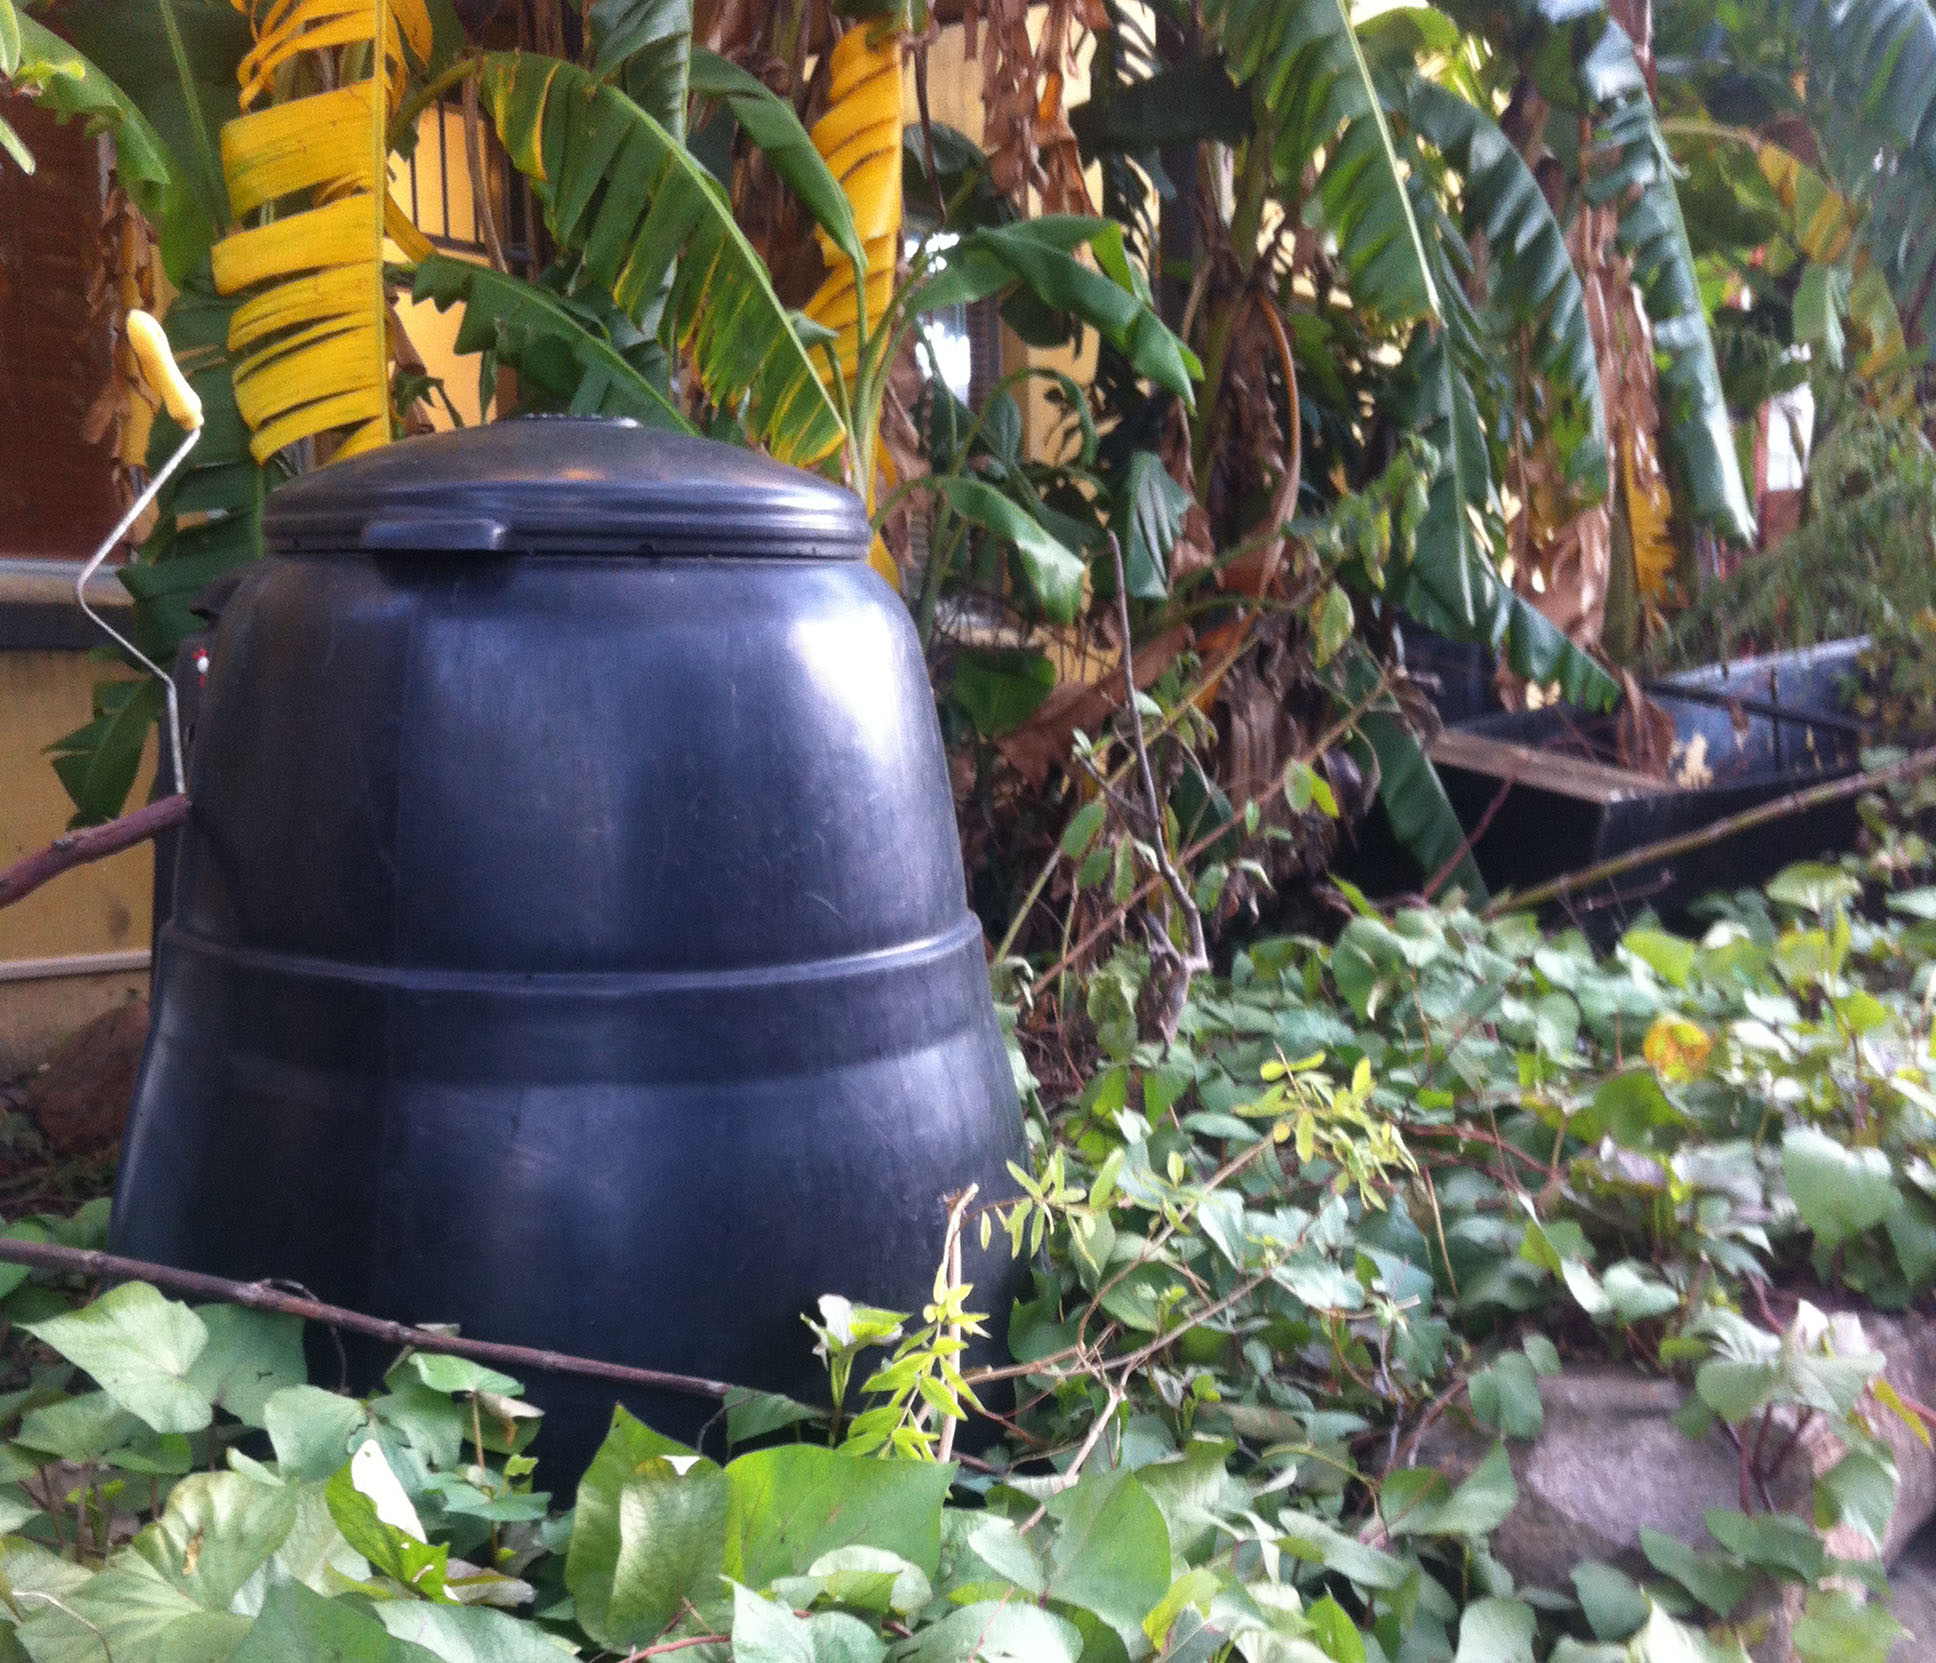 Compost your kitchen scraps at the 241 Bondi Road Community Garden